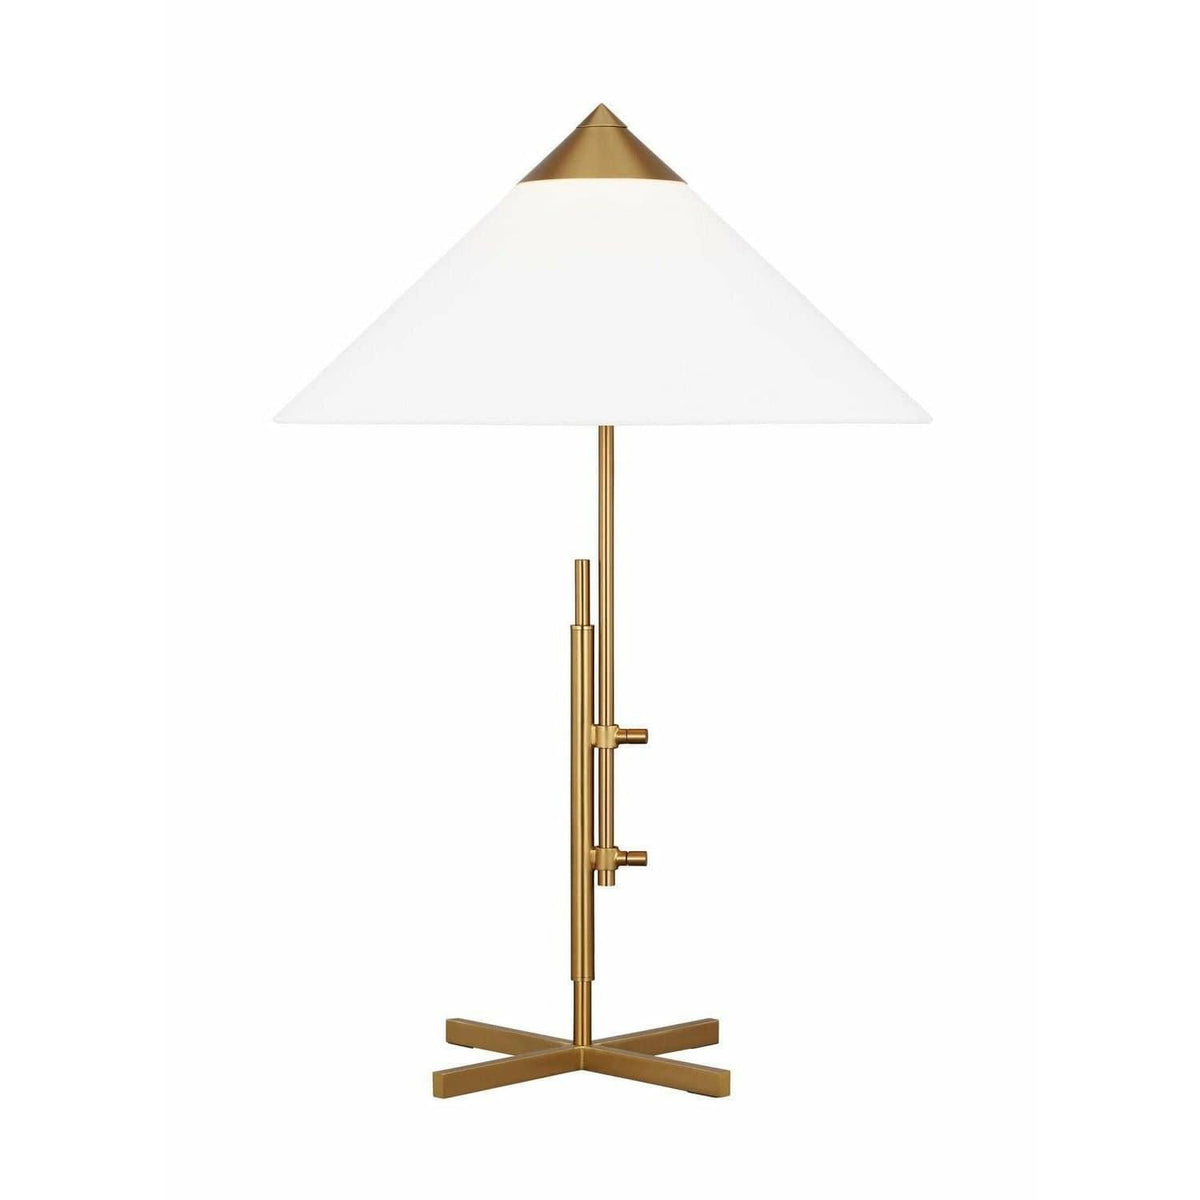 Franklin Table Lamp  Visual Comfort Studio Collection